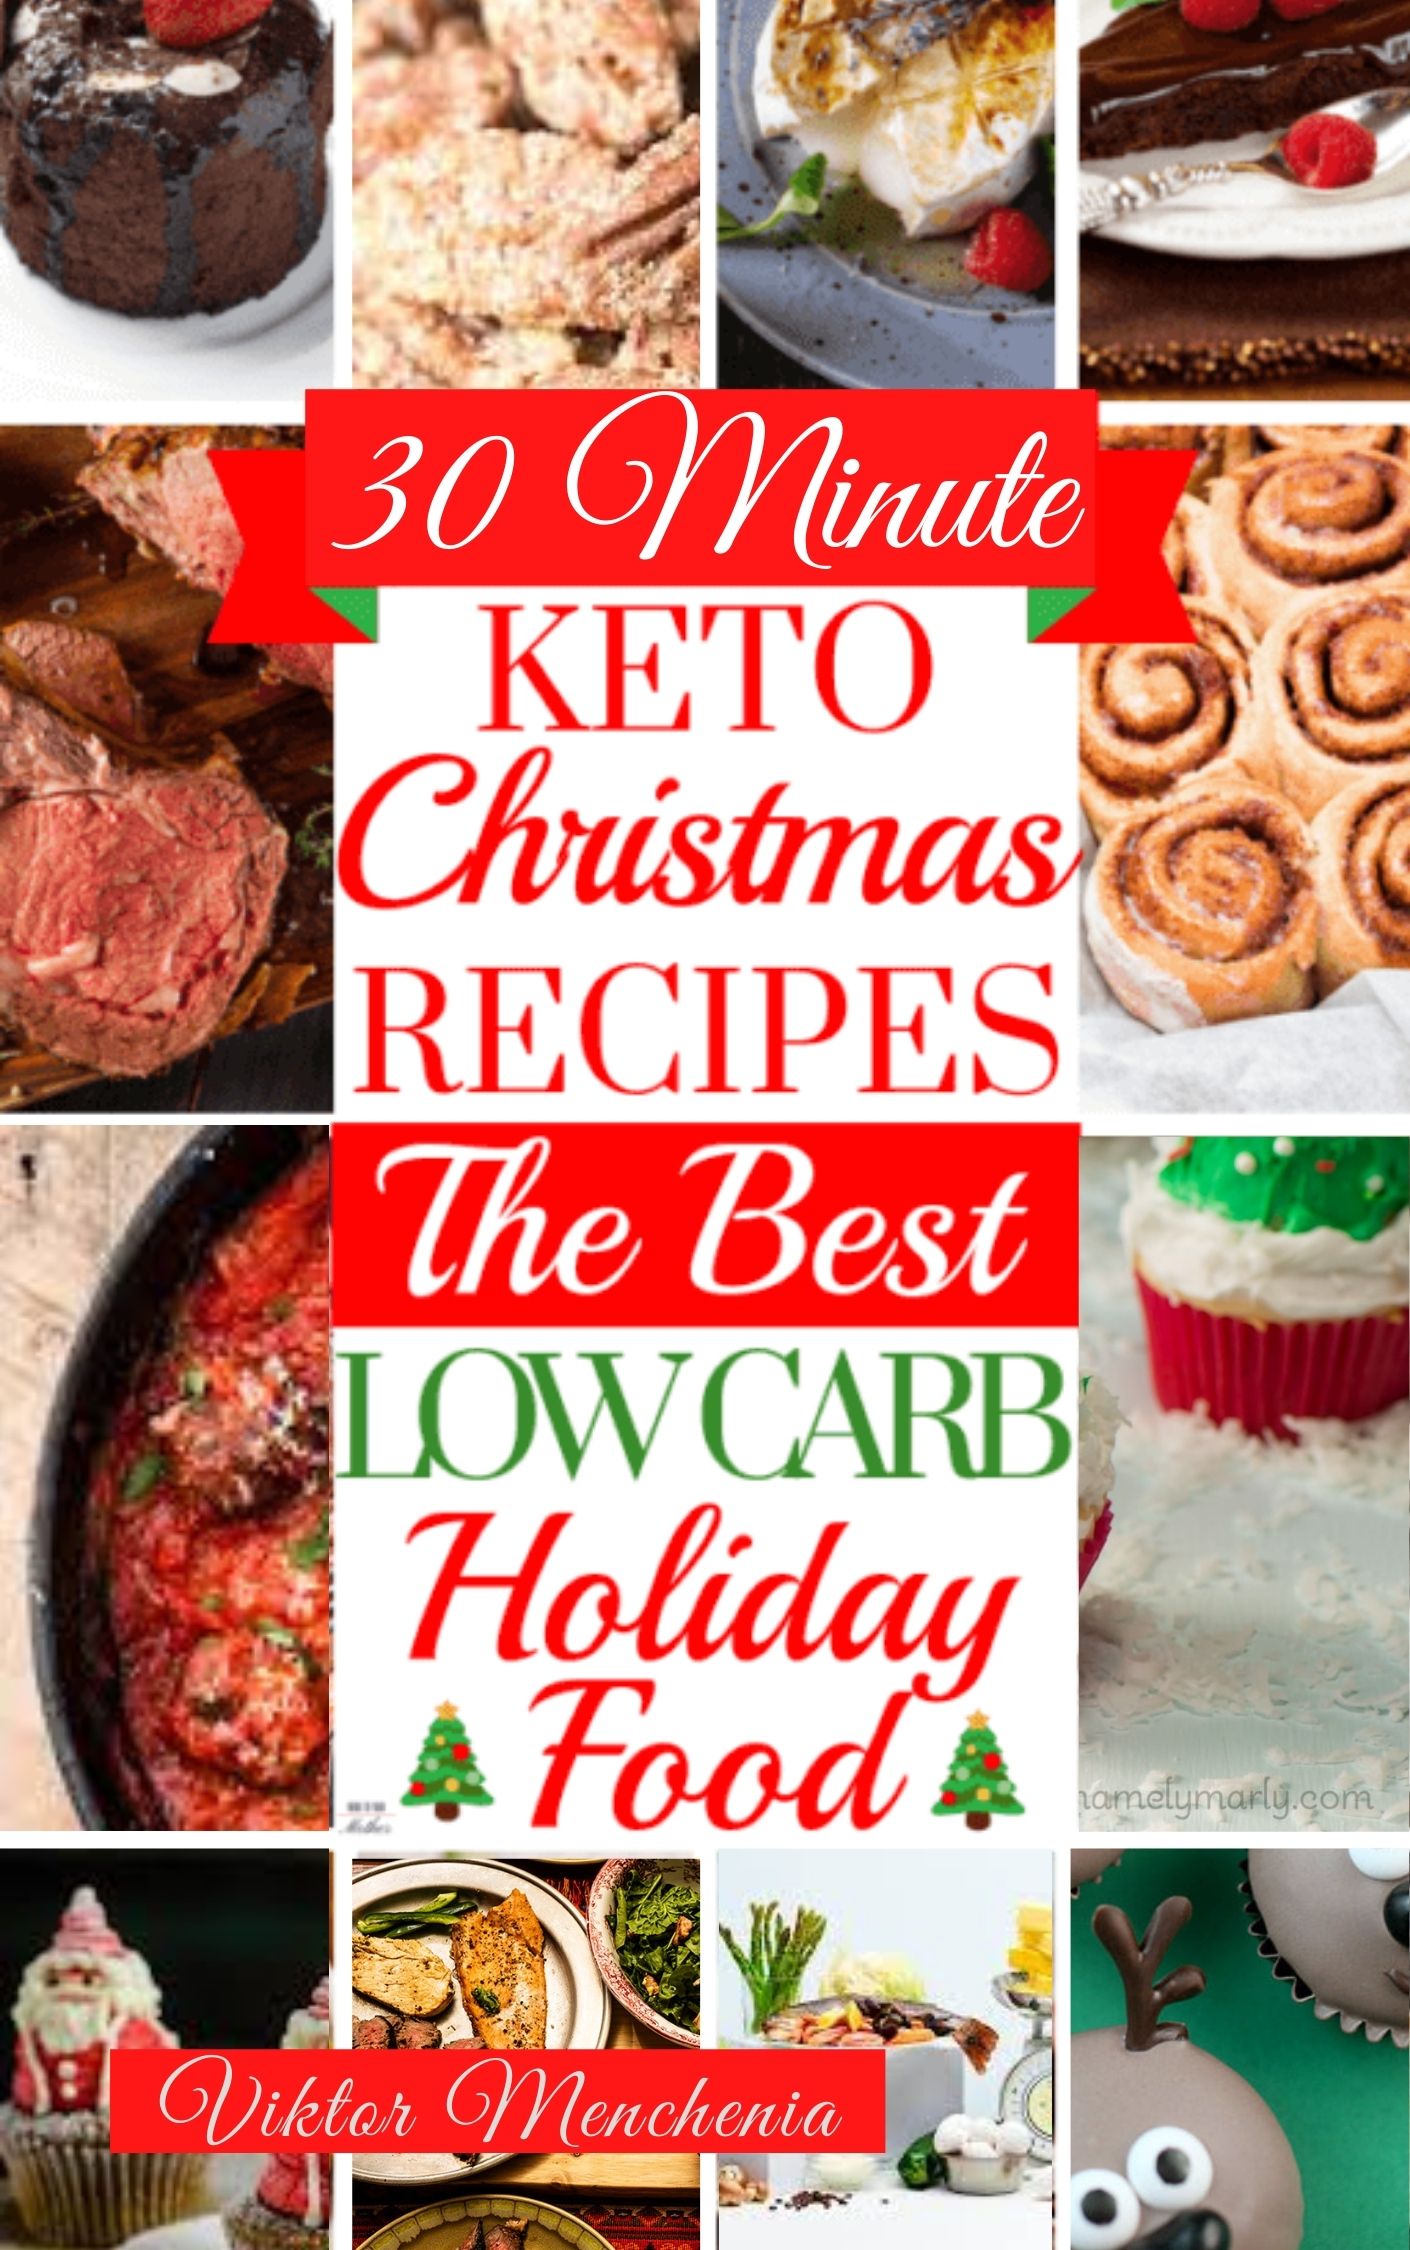 FREE: 30 Minute Keto Christmas Recipes by Viktor Menchenia